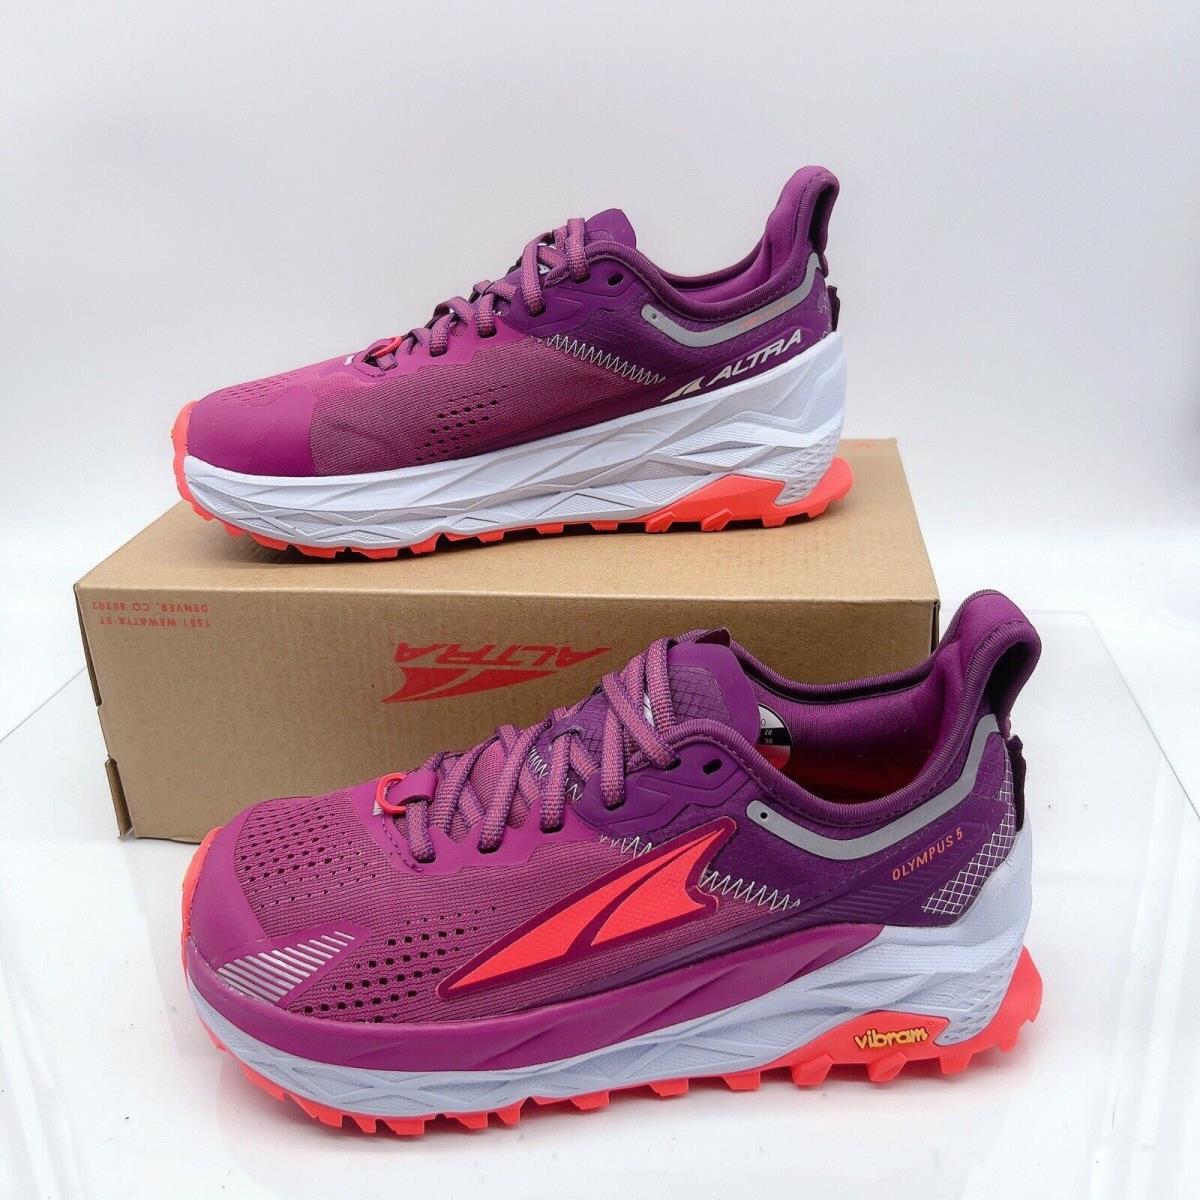 Altra Olympus 5 Women s Running Shoes Sneakers Purple Orange US 7